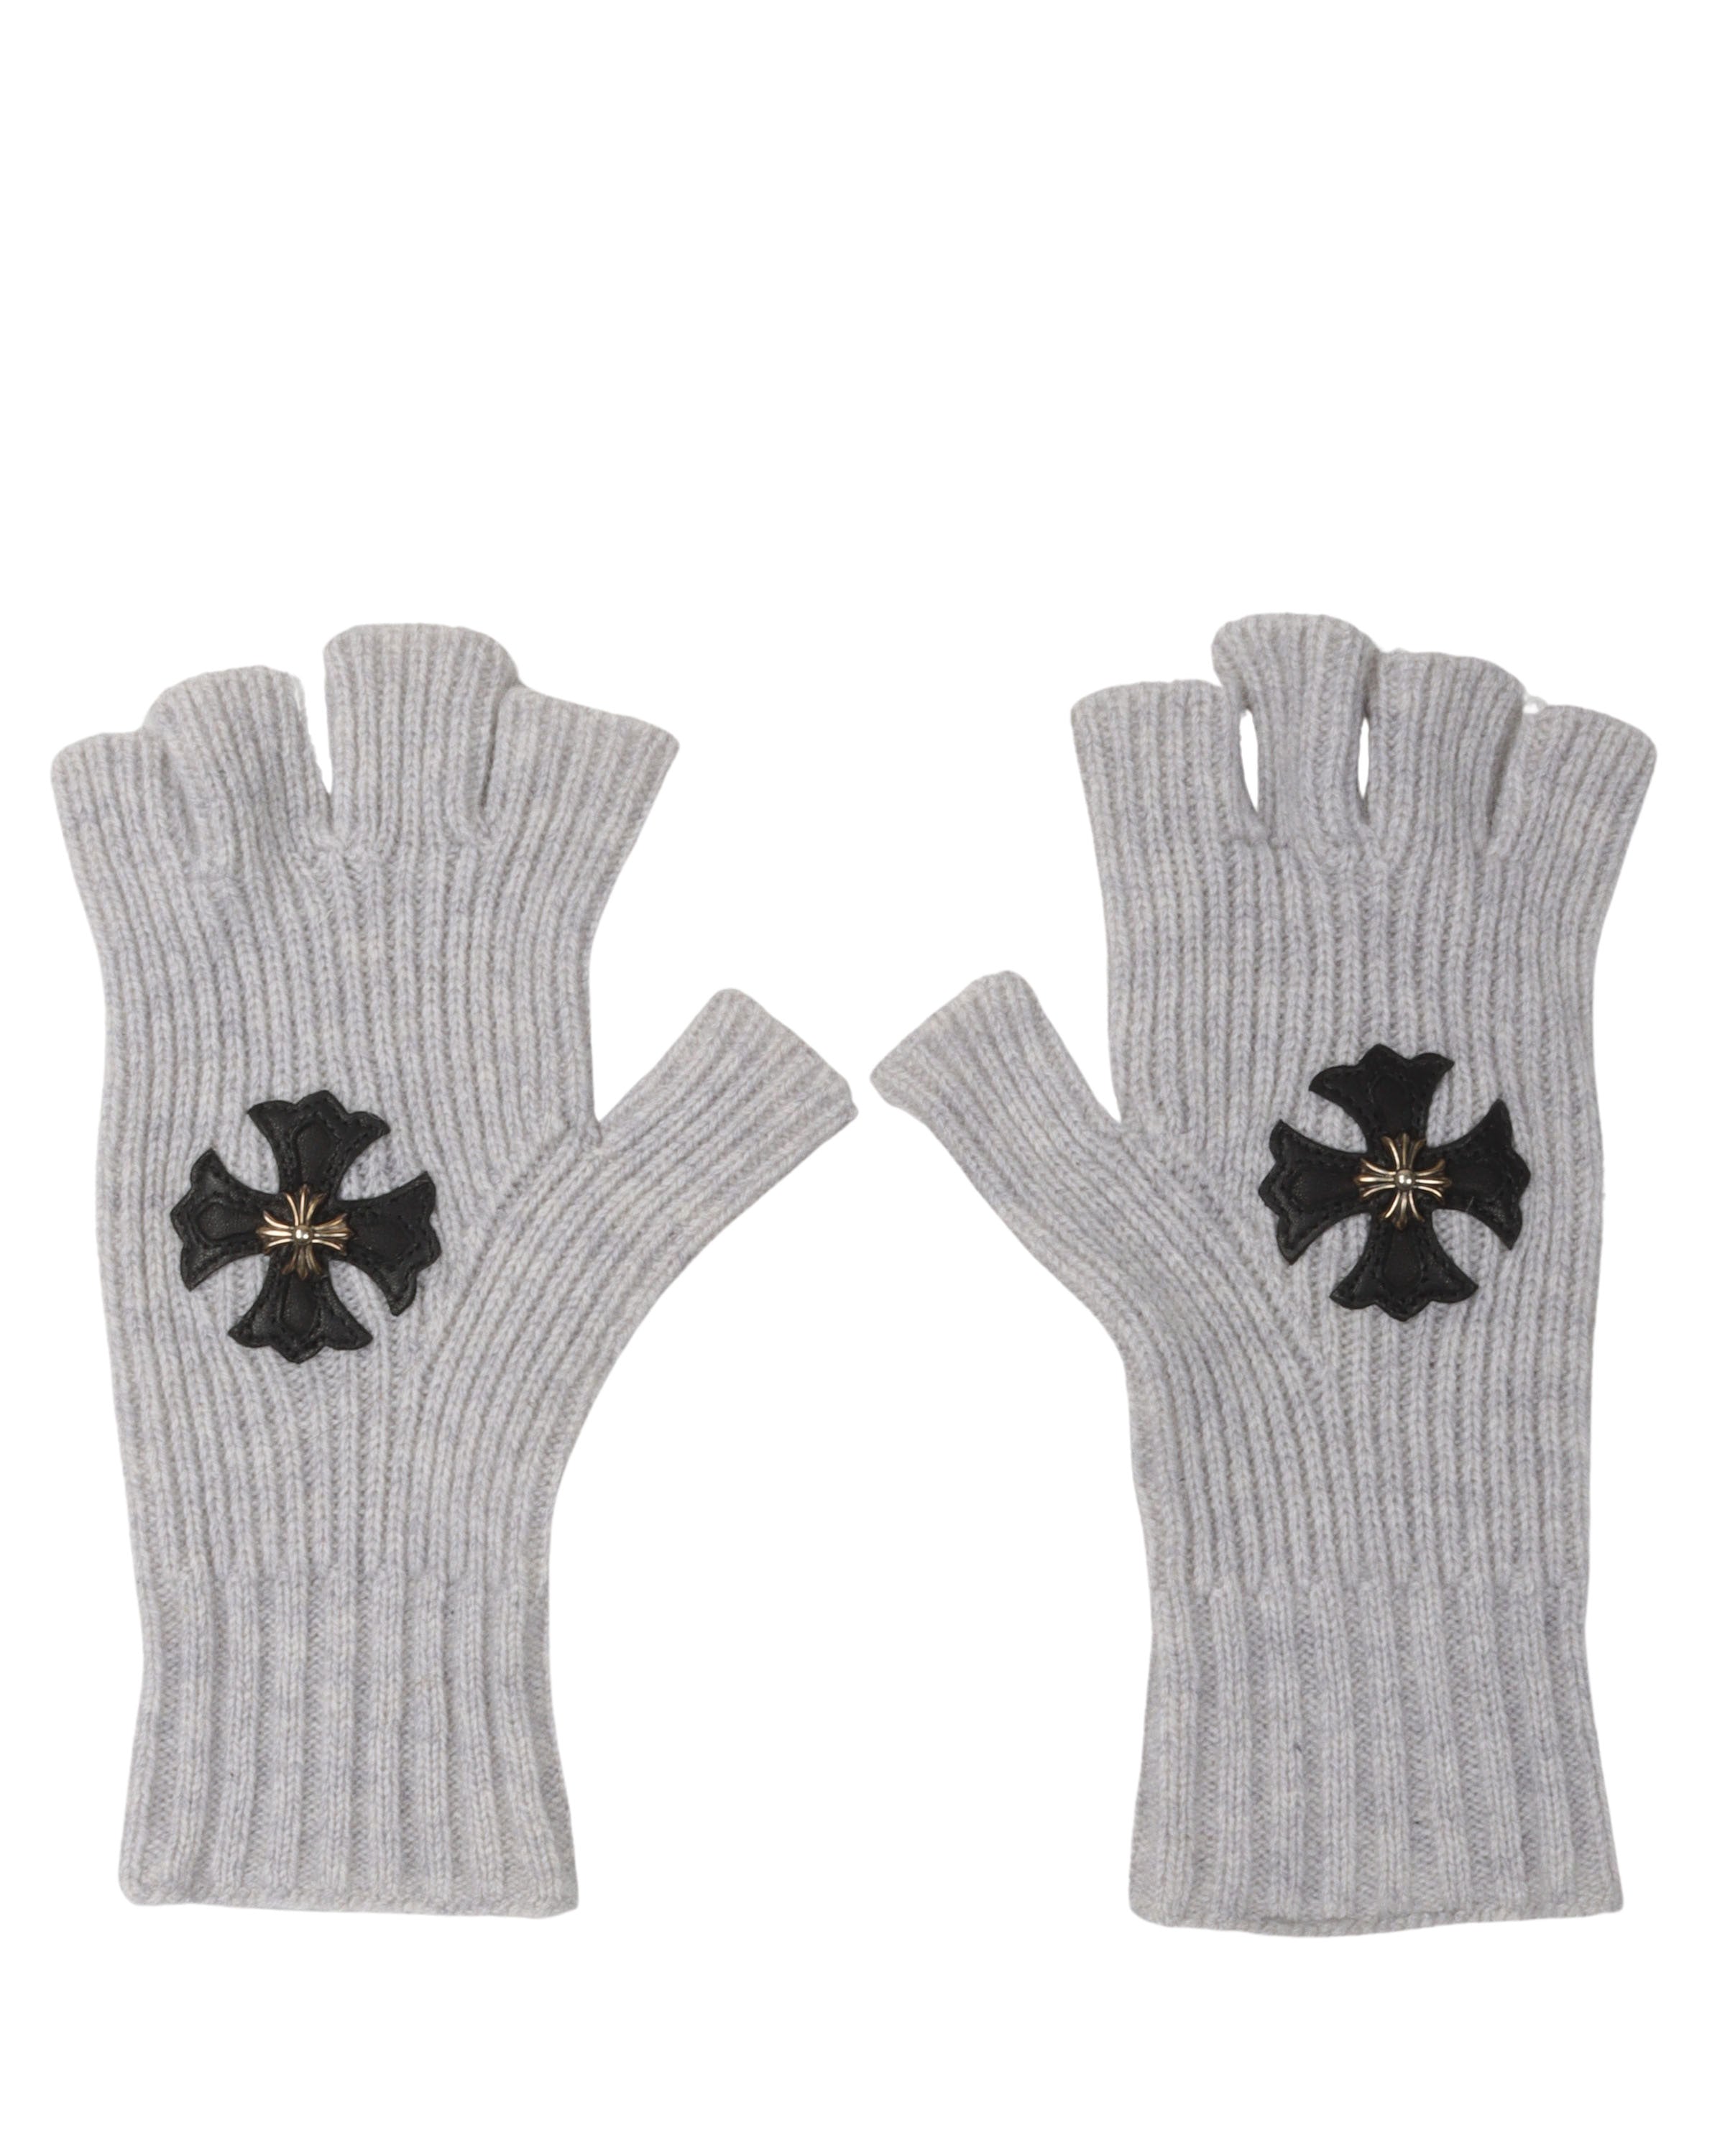 Sample Cashmere Plus Cross Gloves